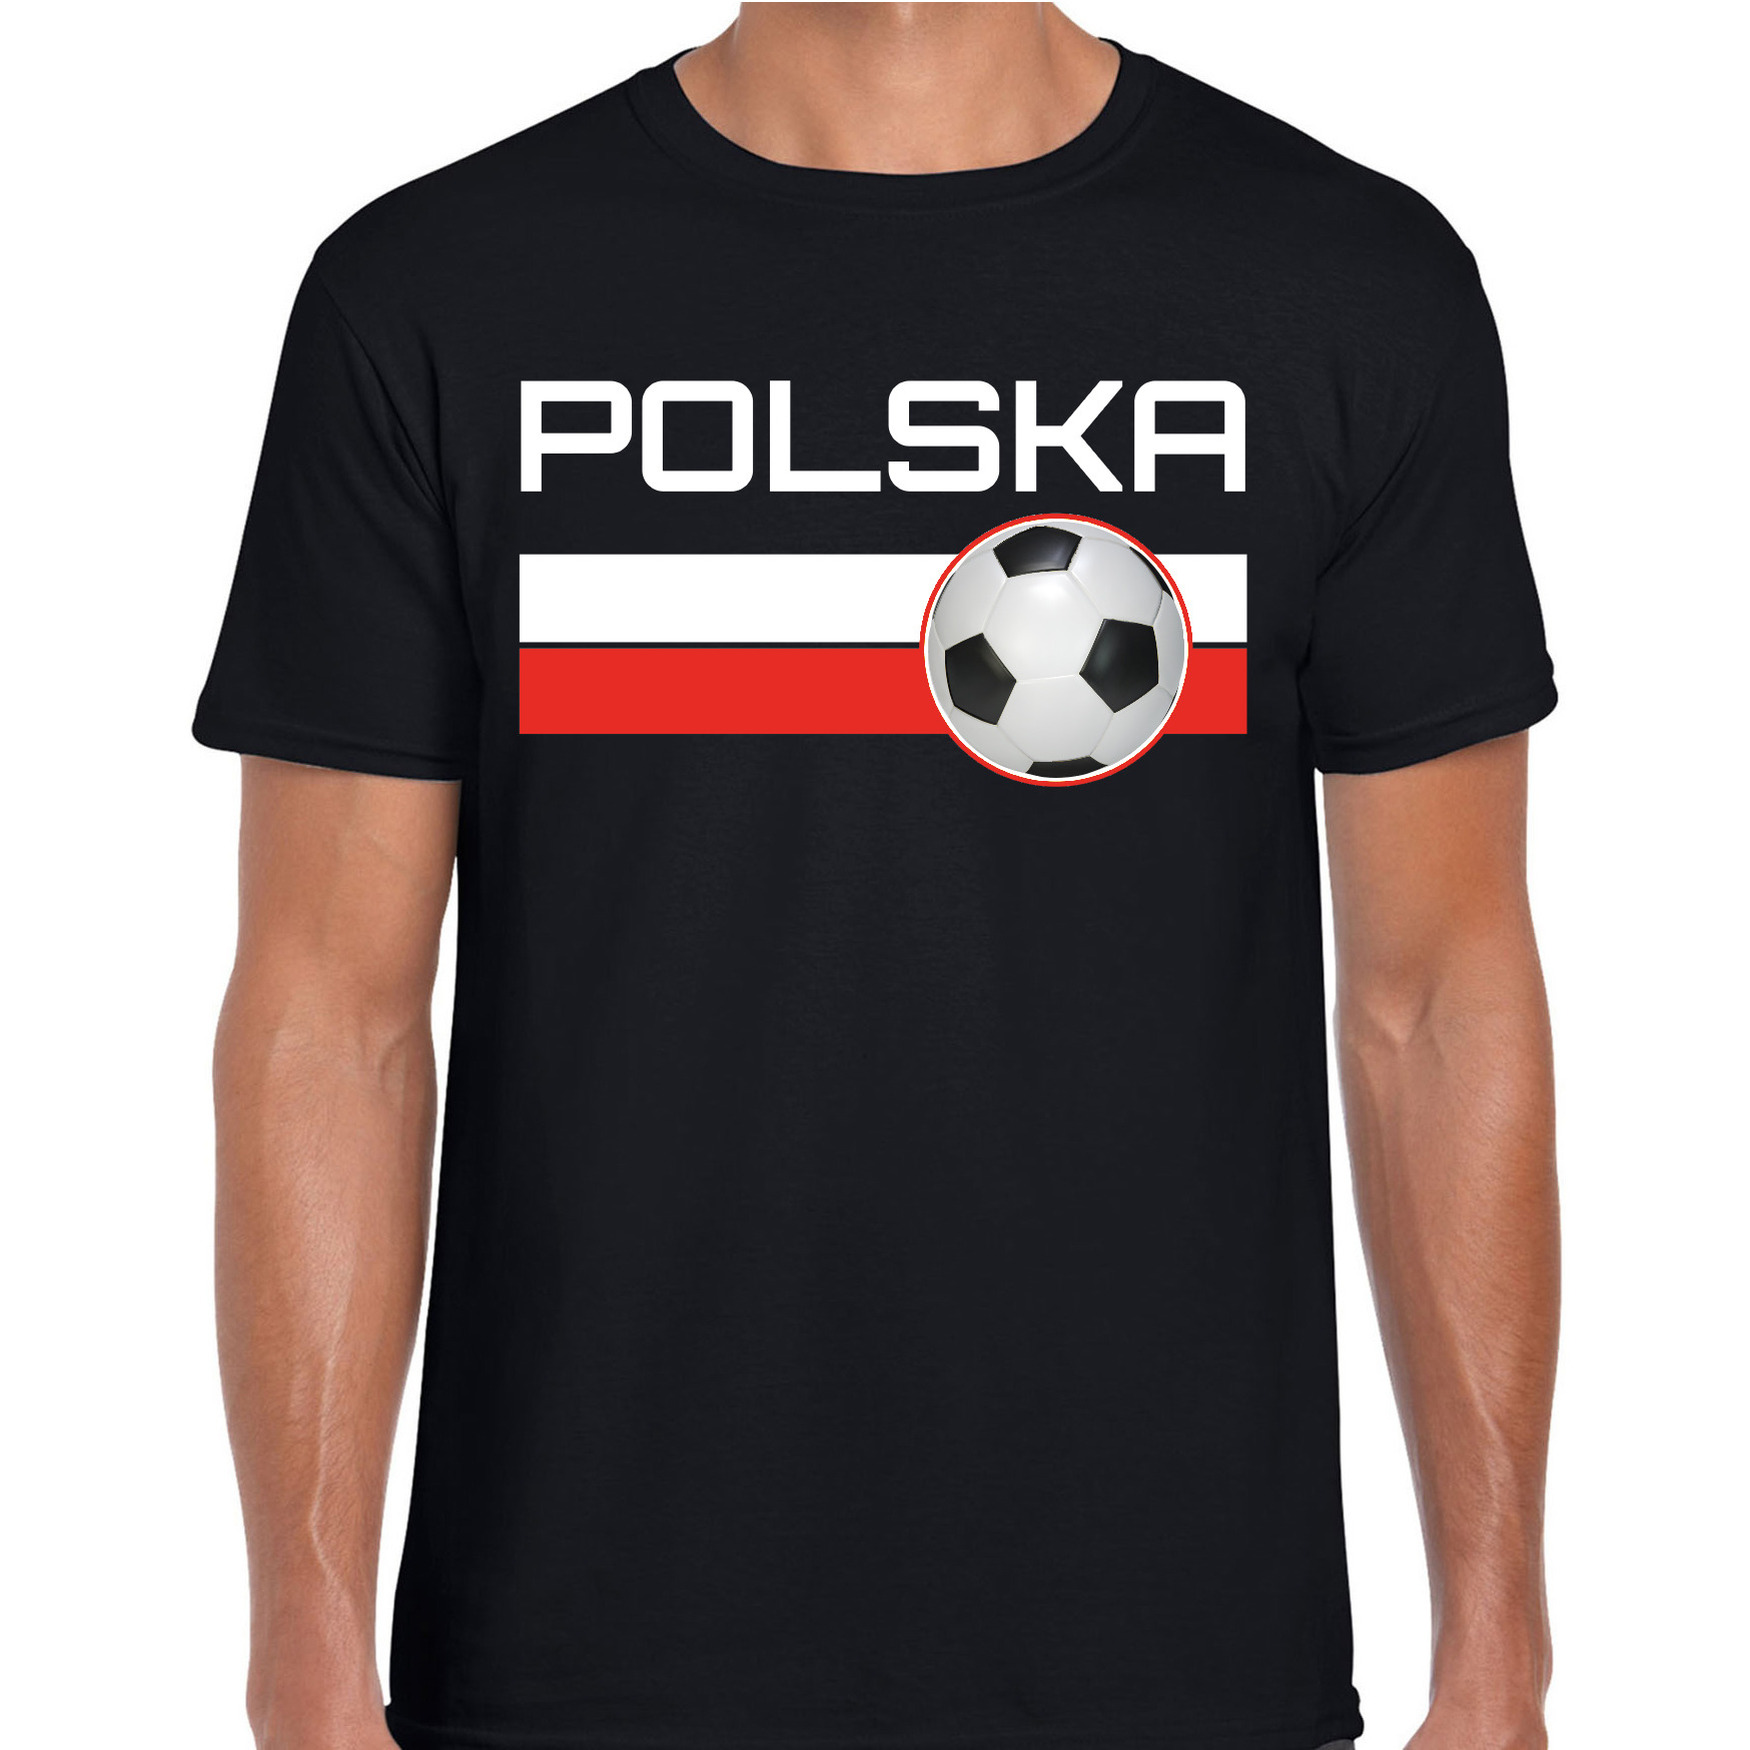 Polska-Polen voetbal-landen t-shirt zwart heren